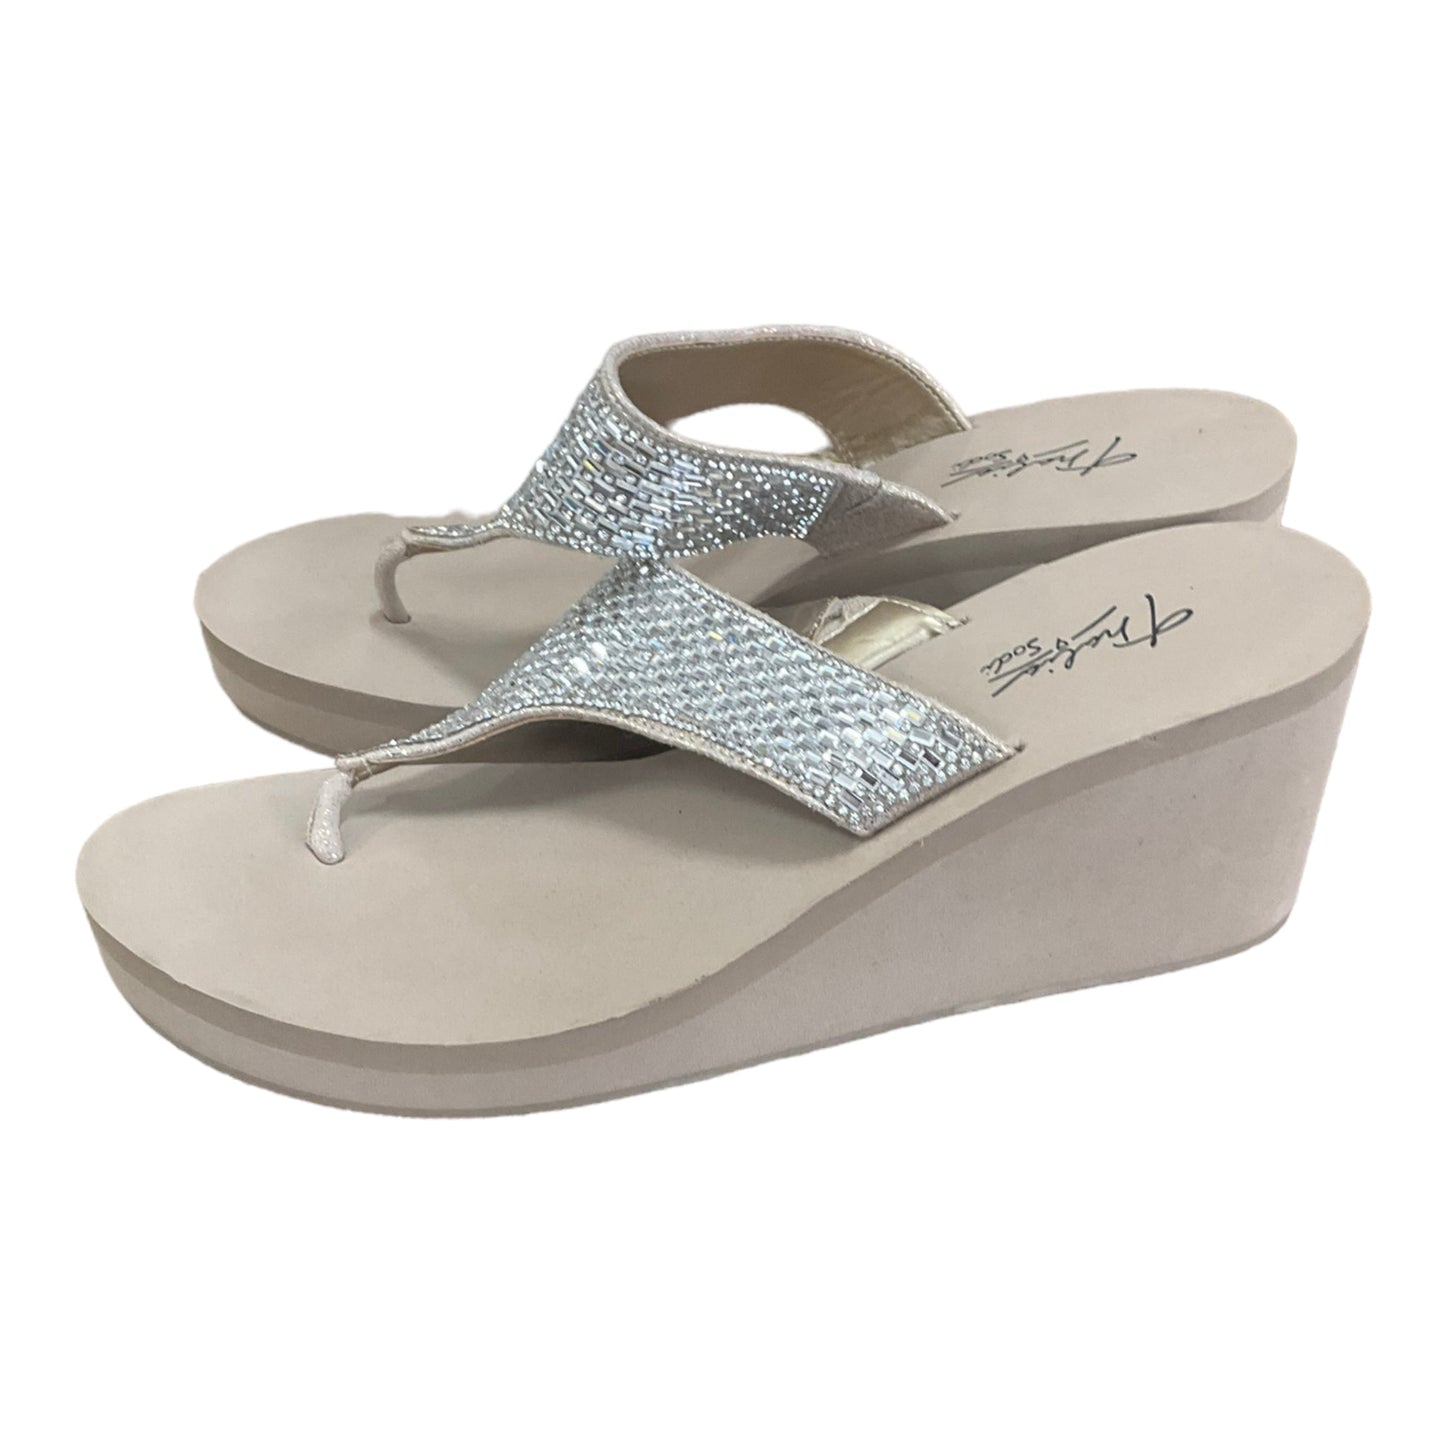 Sandals Heels Wedge By Thalia Sodi  Size: 8